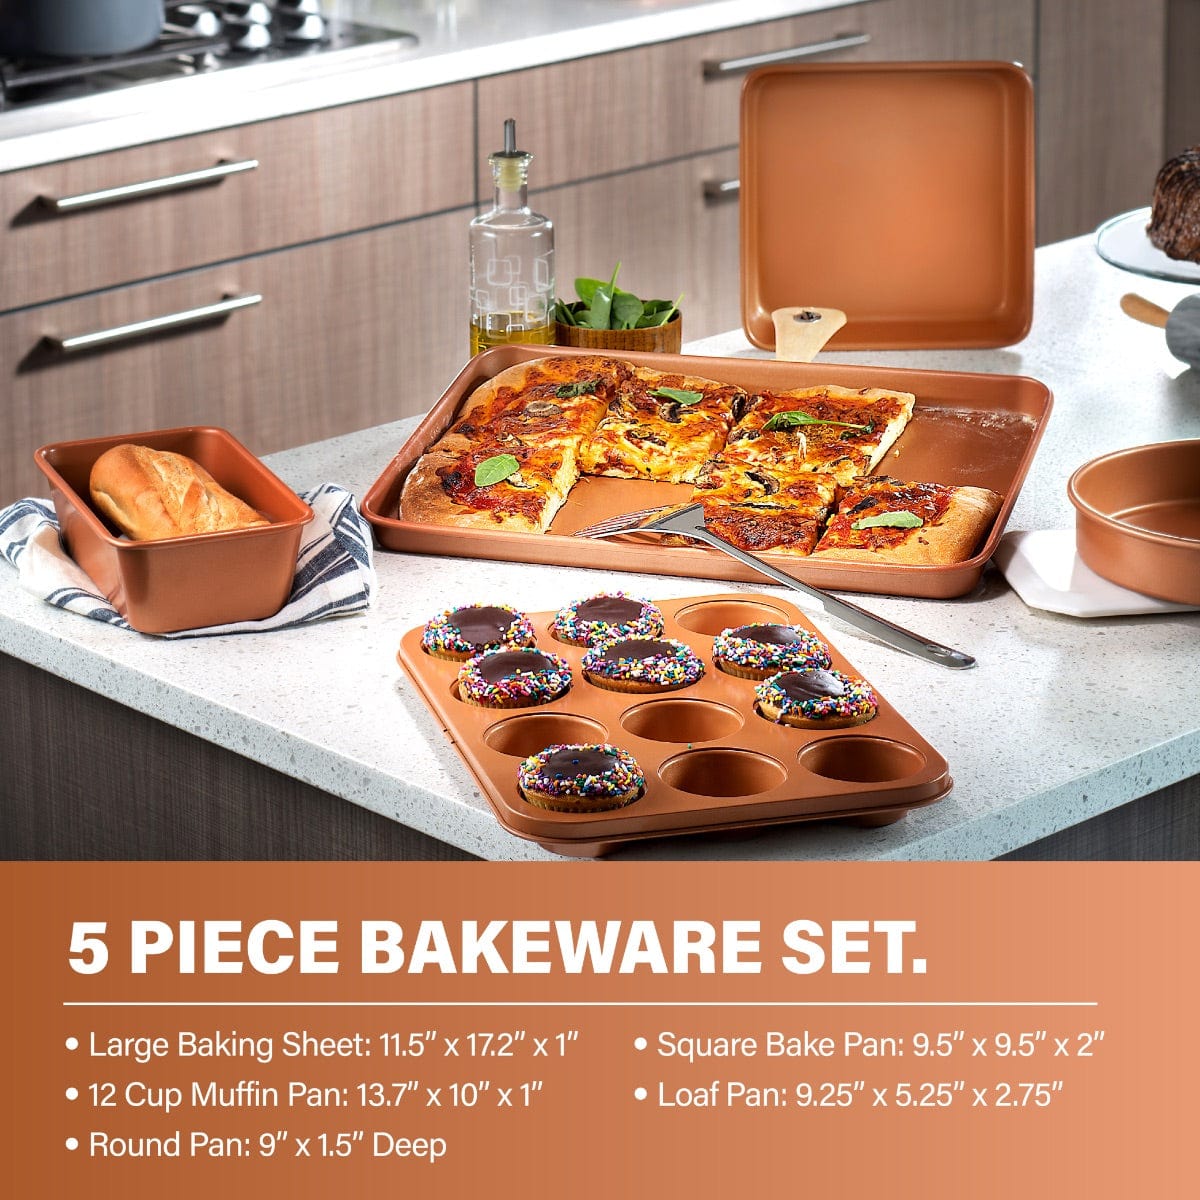 15 Piece Gotham Steel Hammered Copper Cookware & Bakeware Set EM2984